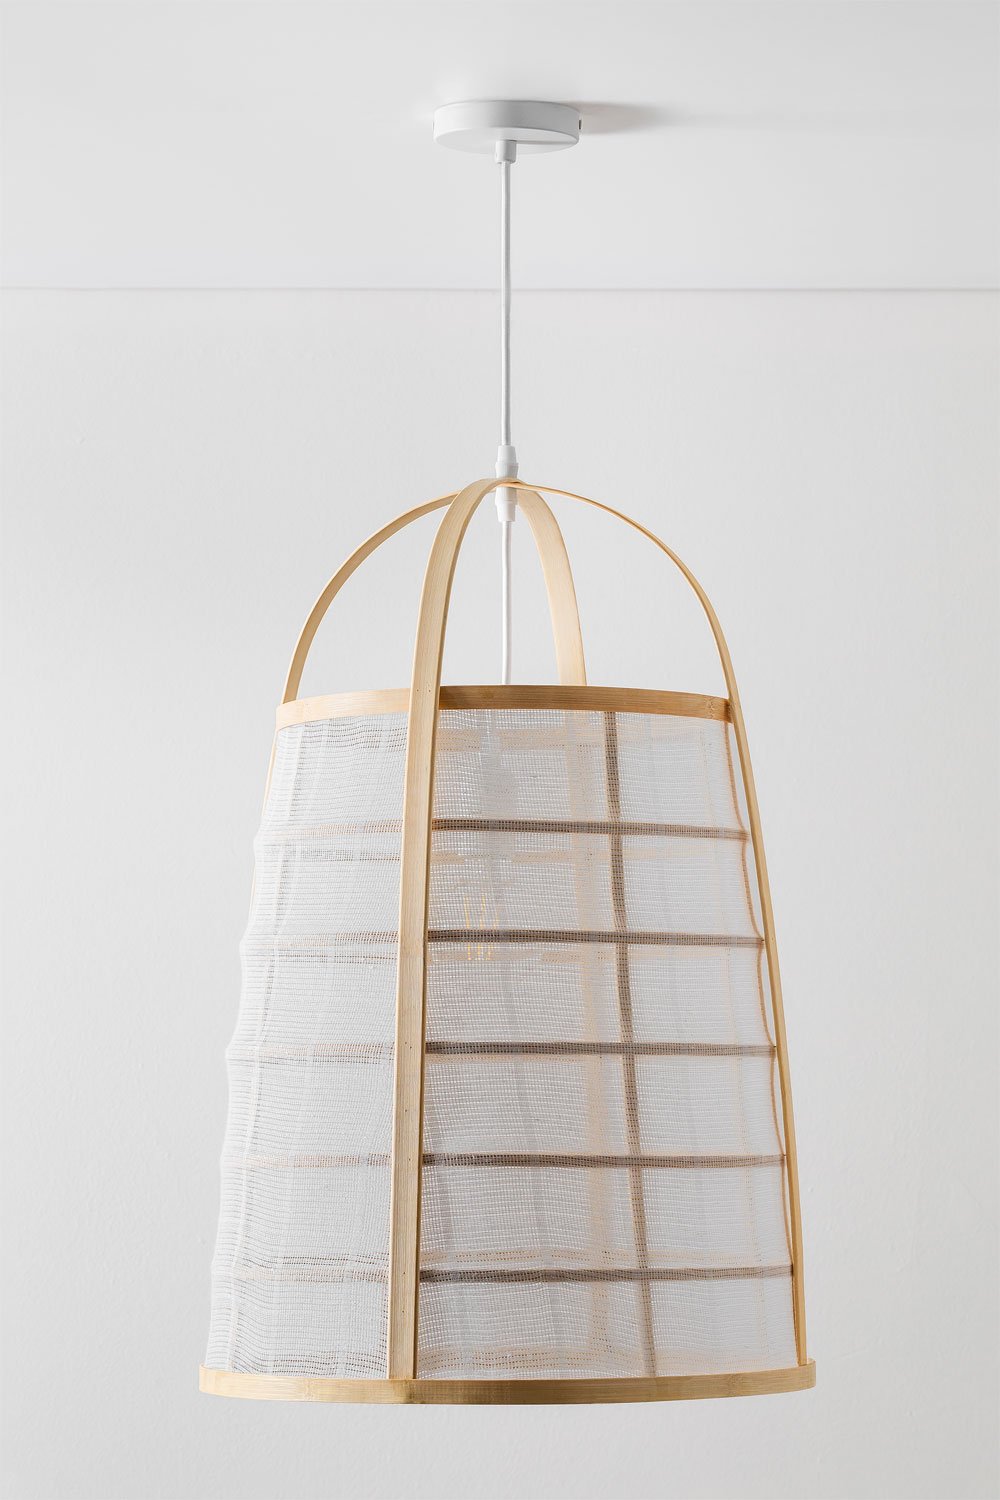 Plafondlamp van bamboe en katoen (Ø40 cm) Mikayla, galerij beeld 1